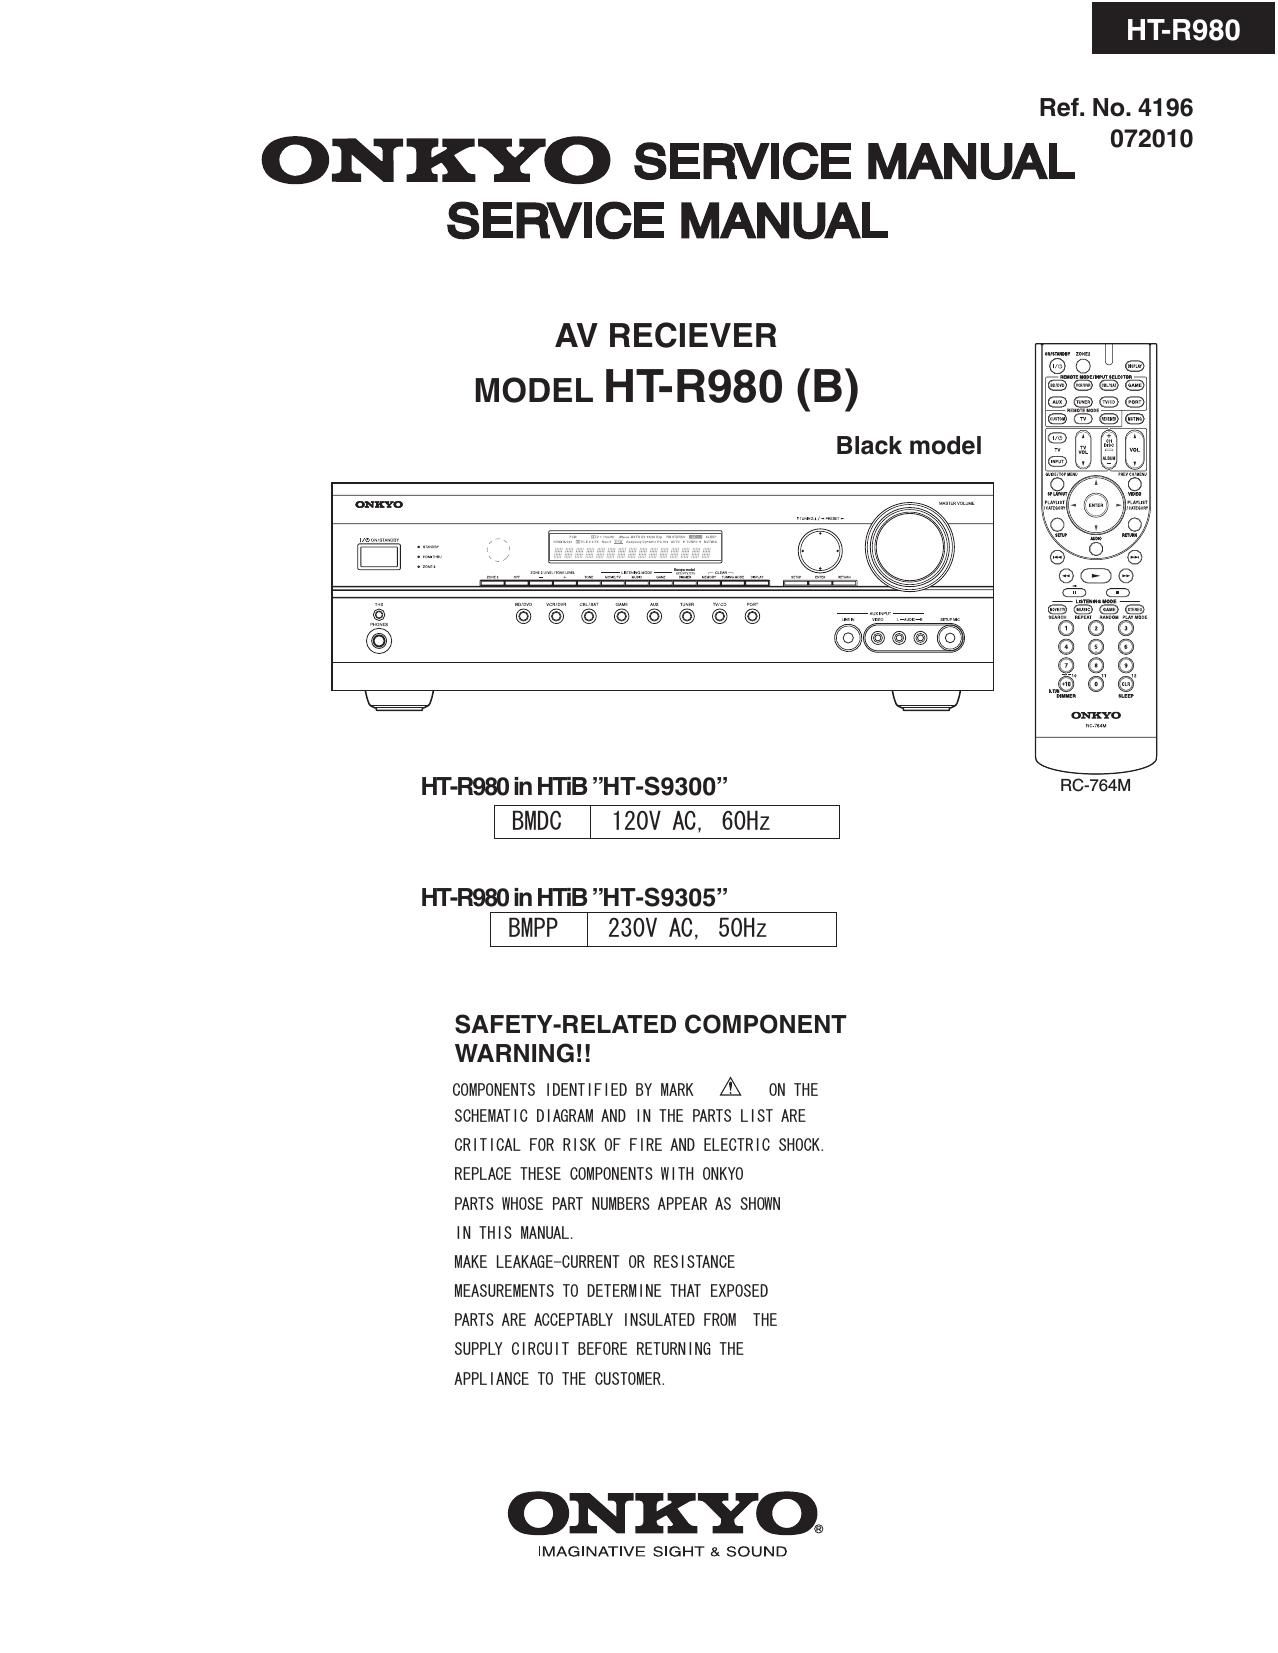 Onkyo HTR 980 Service Manual